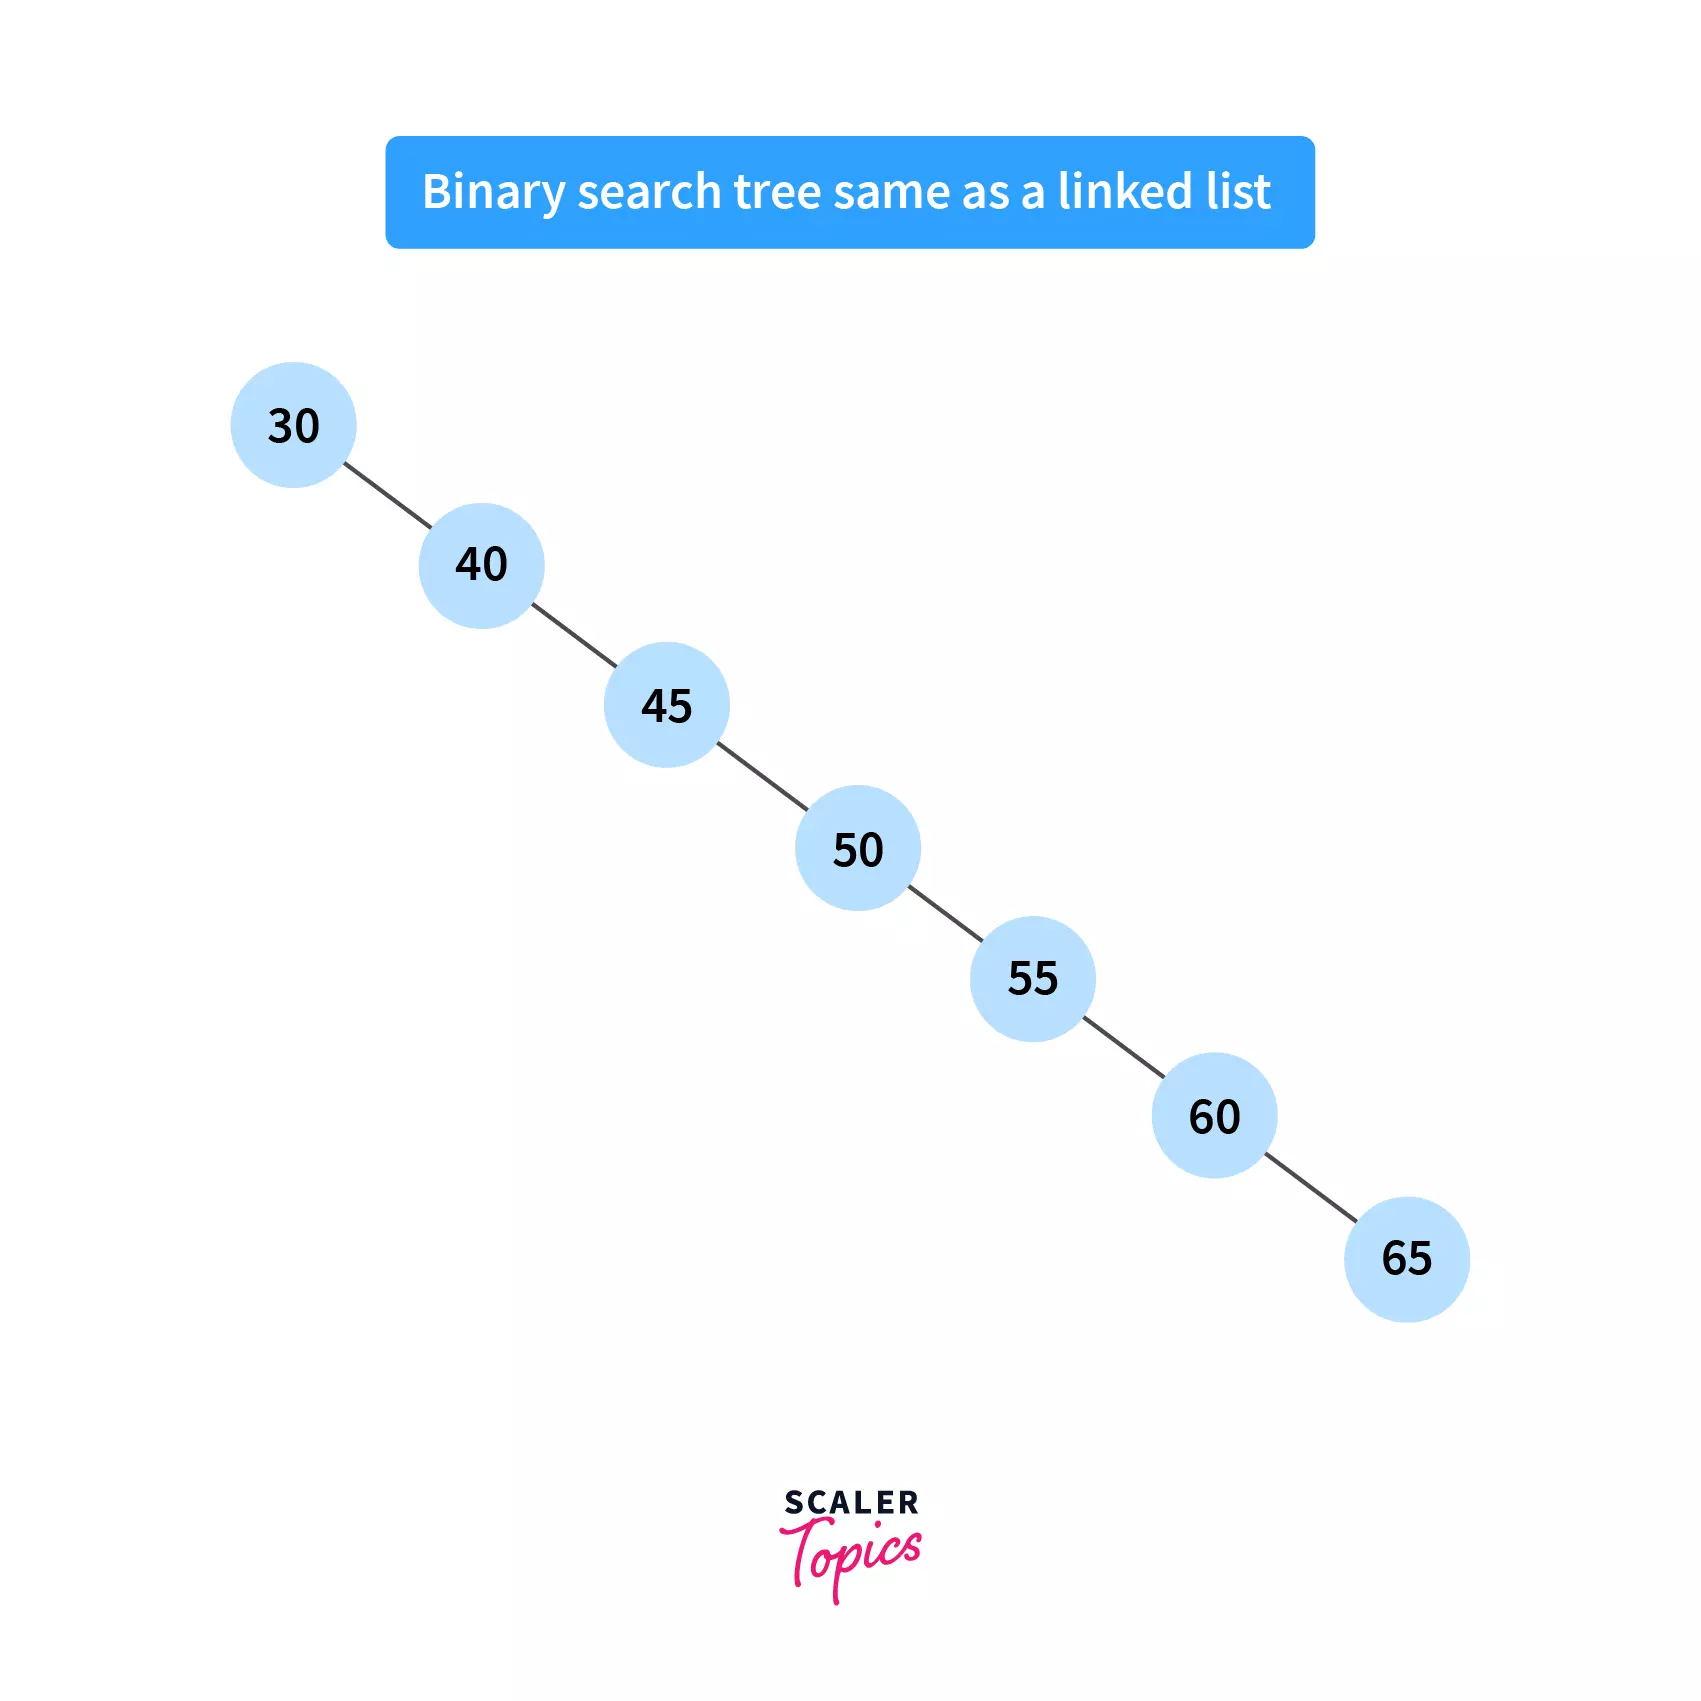 binary search tree same as linked list